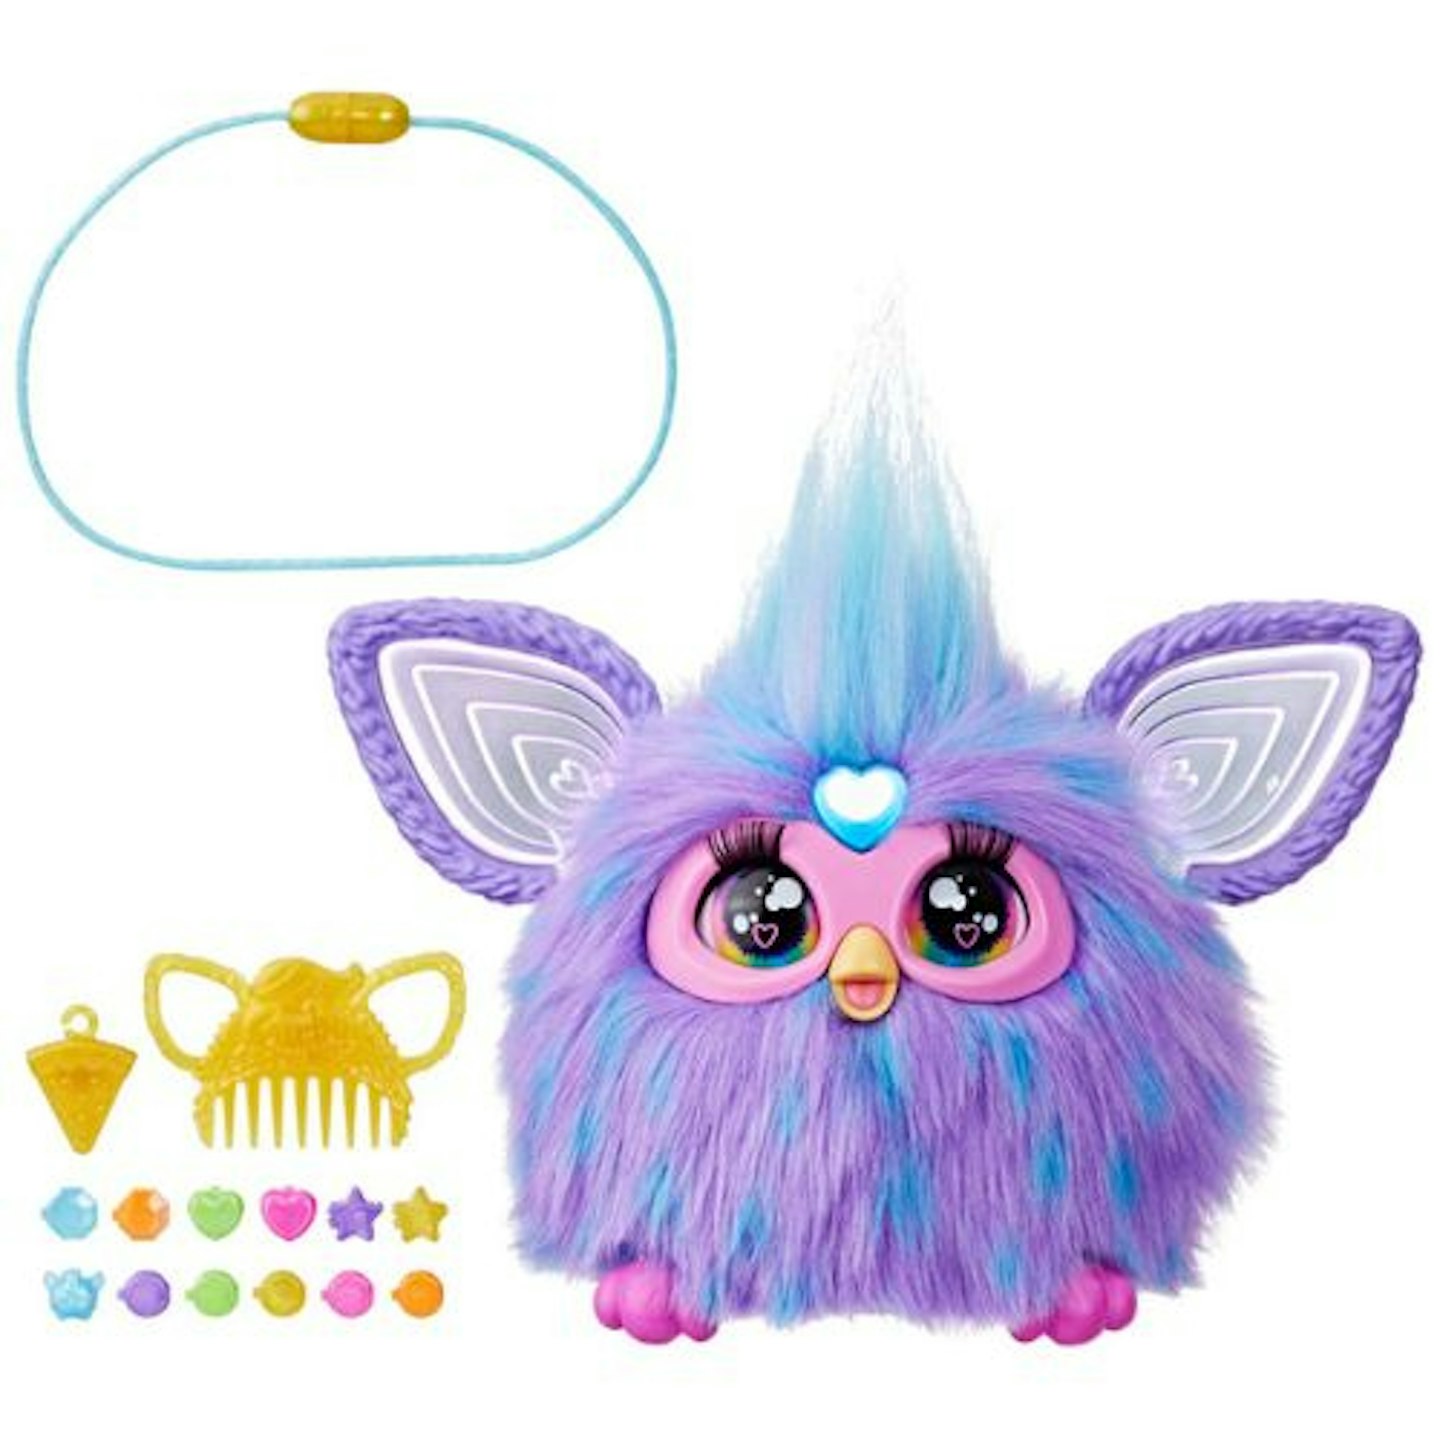 Best Children's Toy: Hasbro Furby Purple Interactive Toy Plush